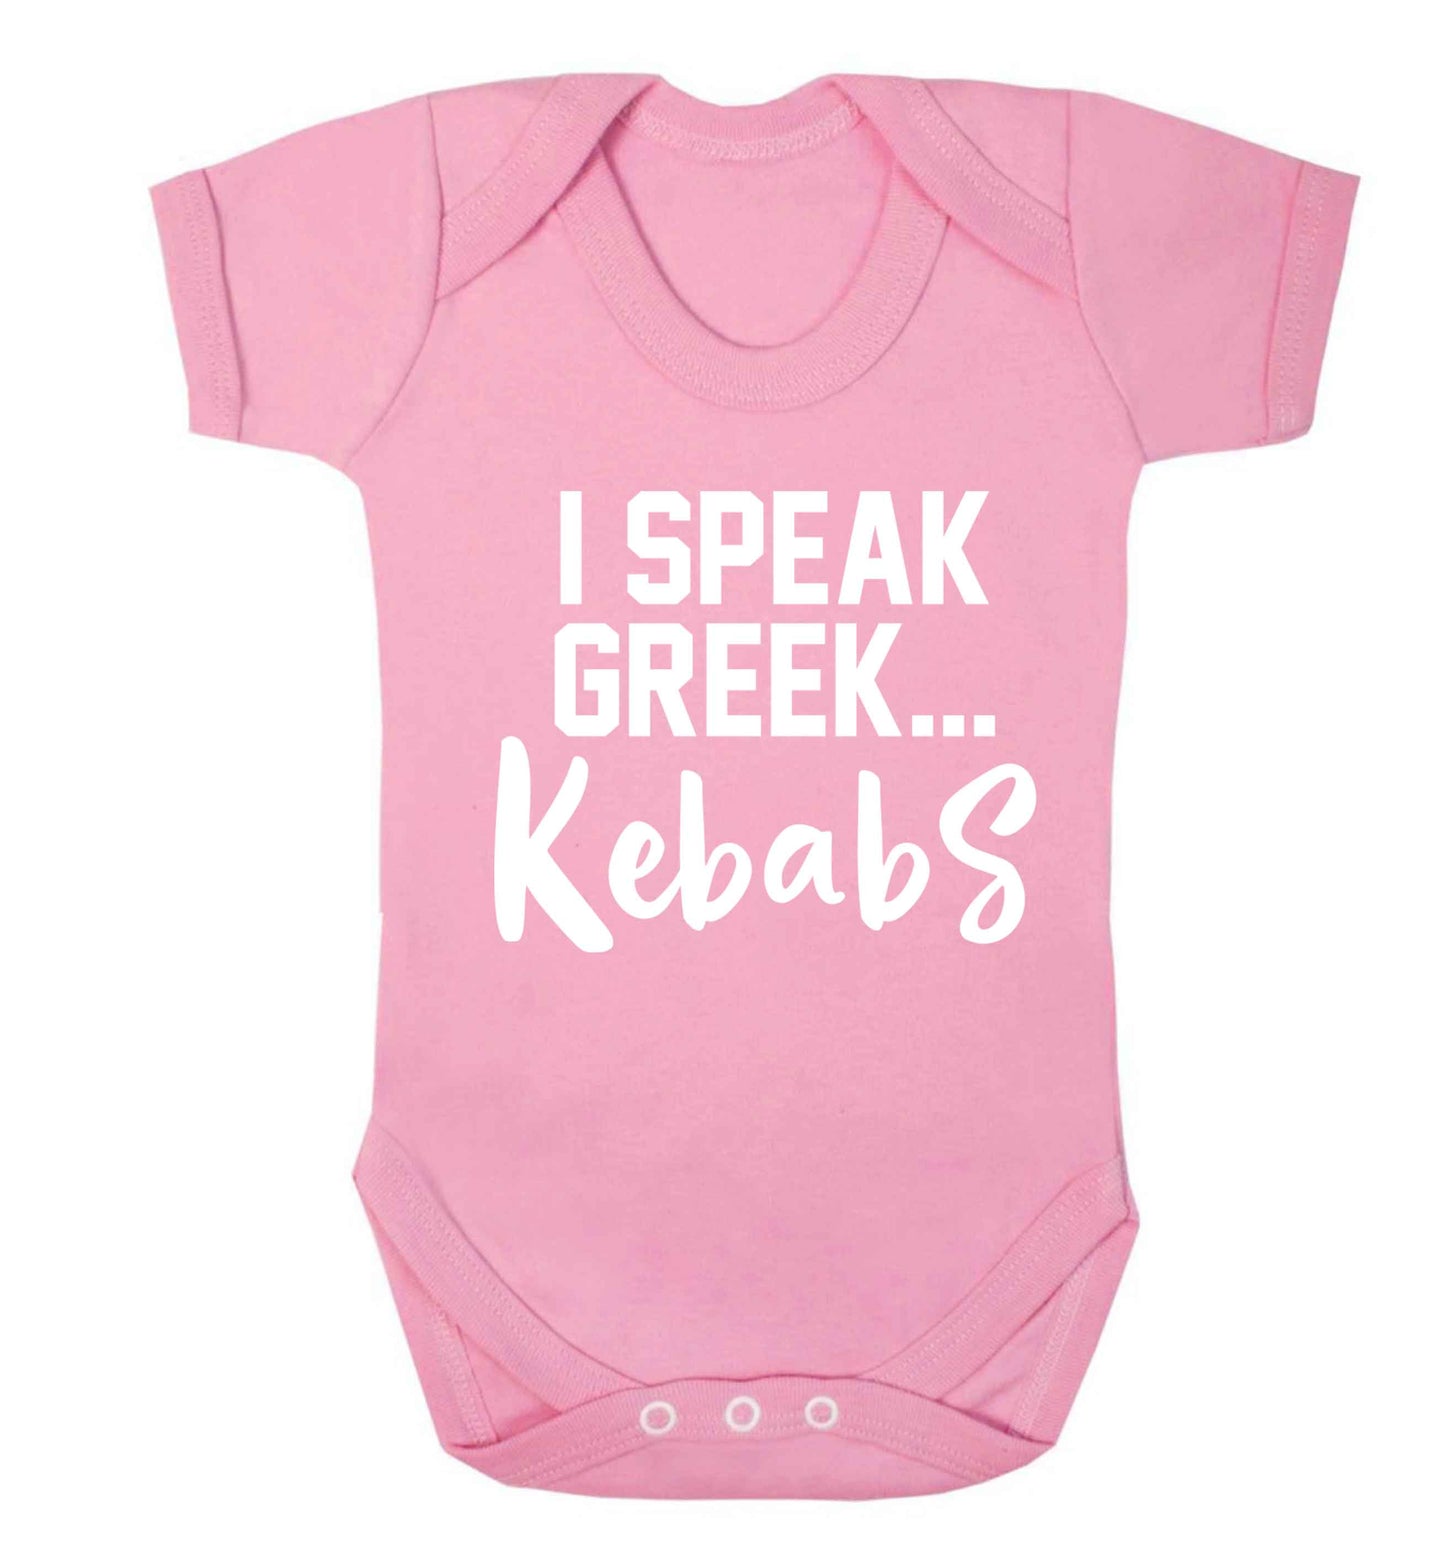 I speak Greek...kebabs Baby Vest pale pink 18-24 months